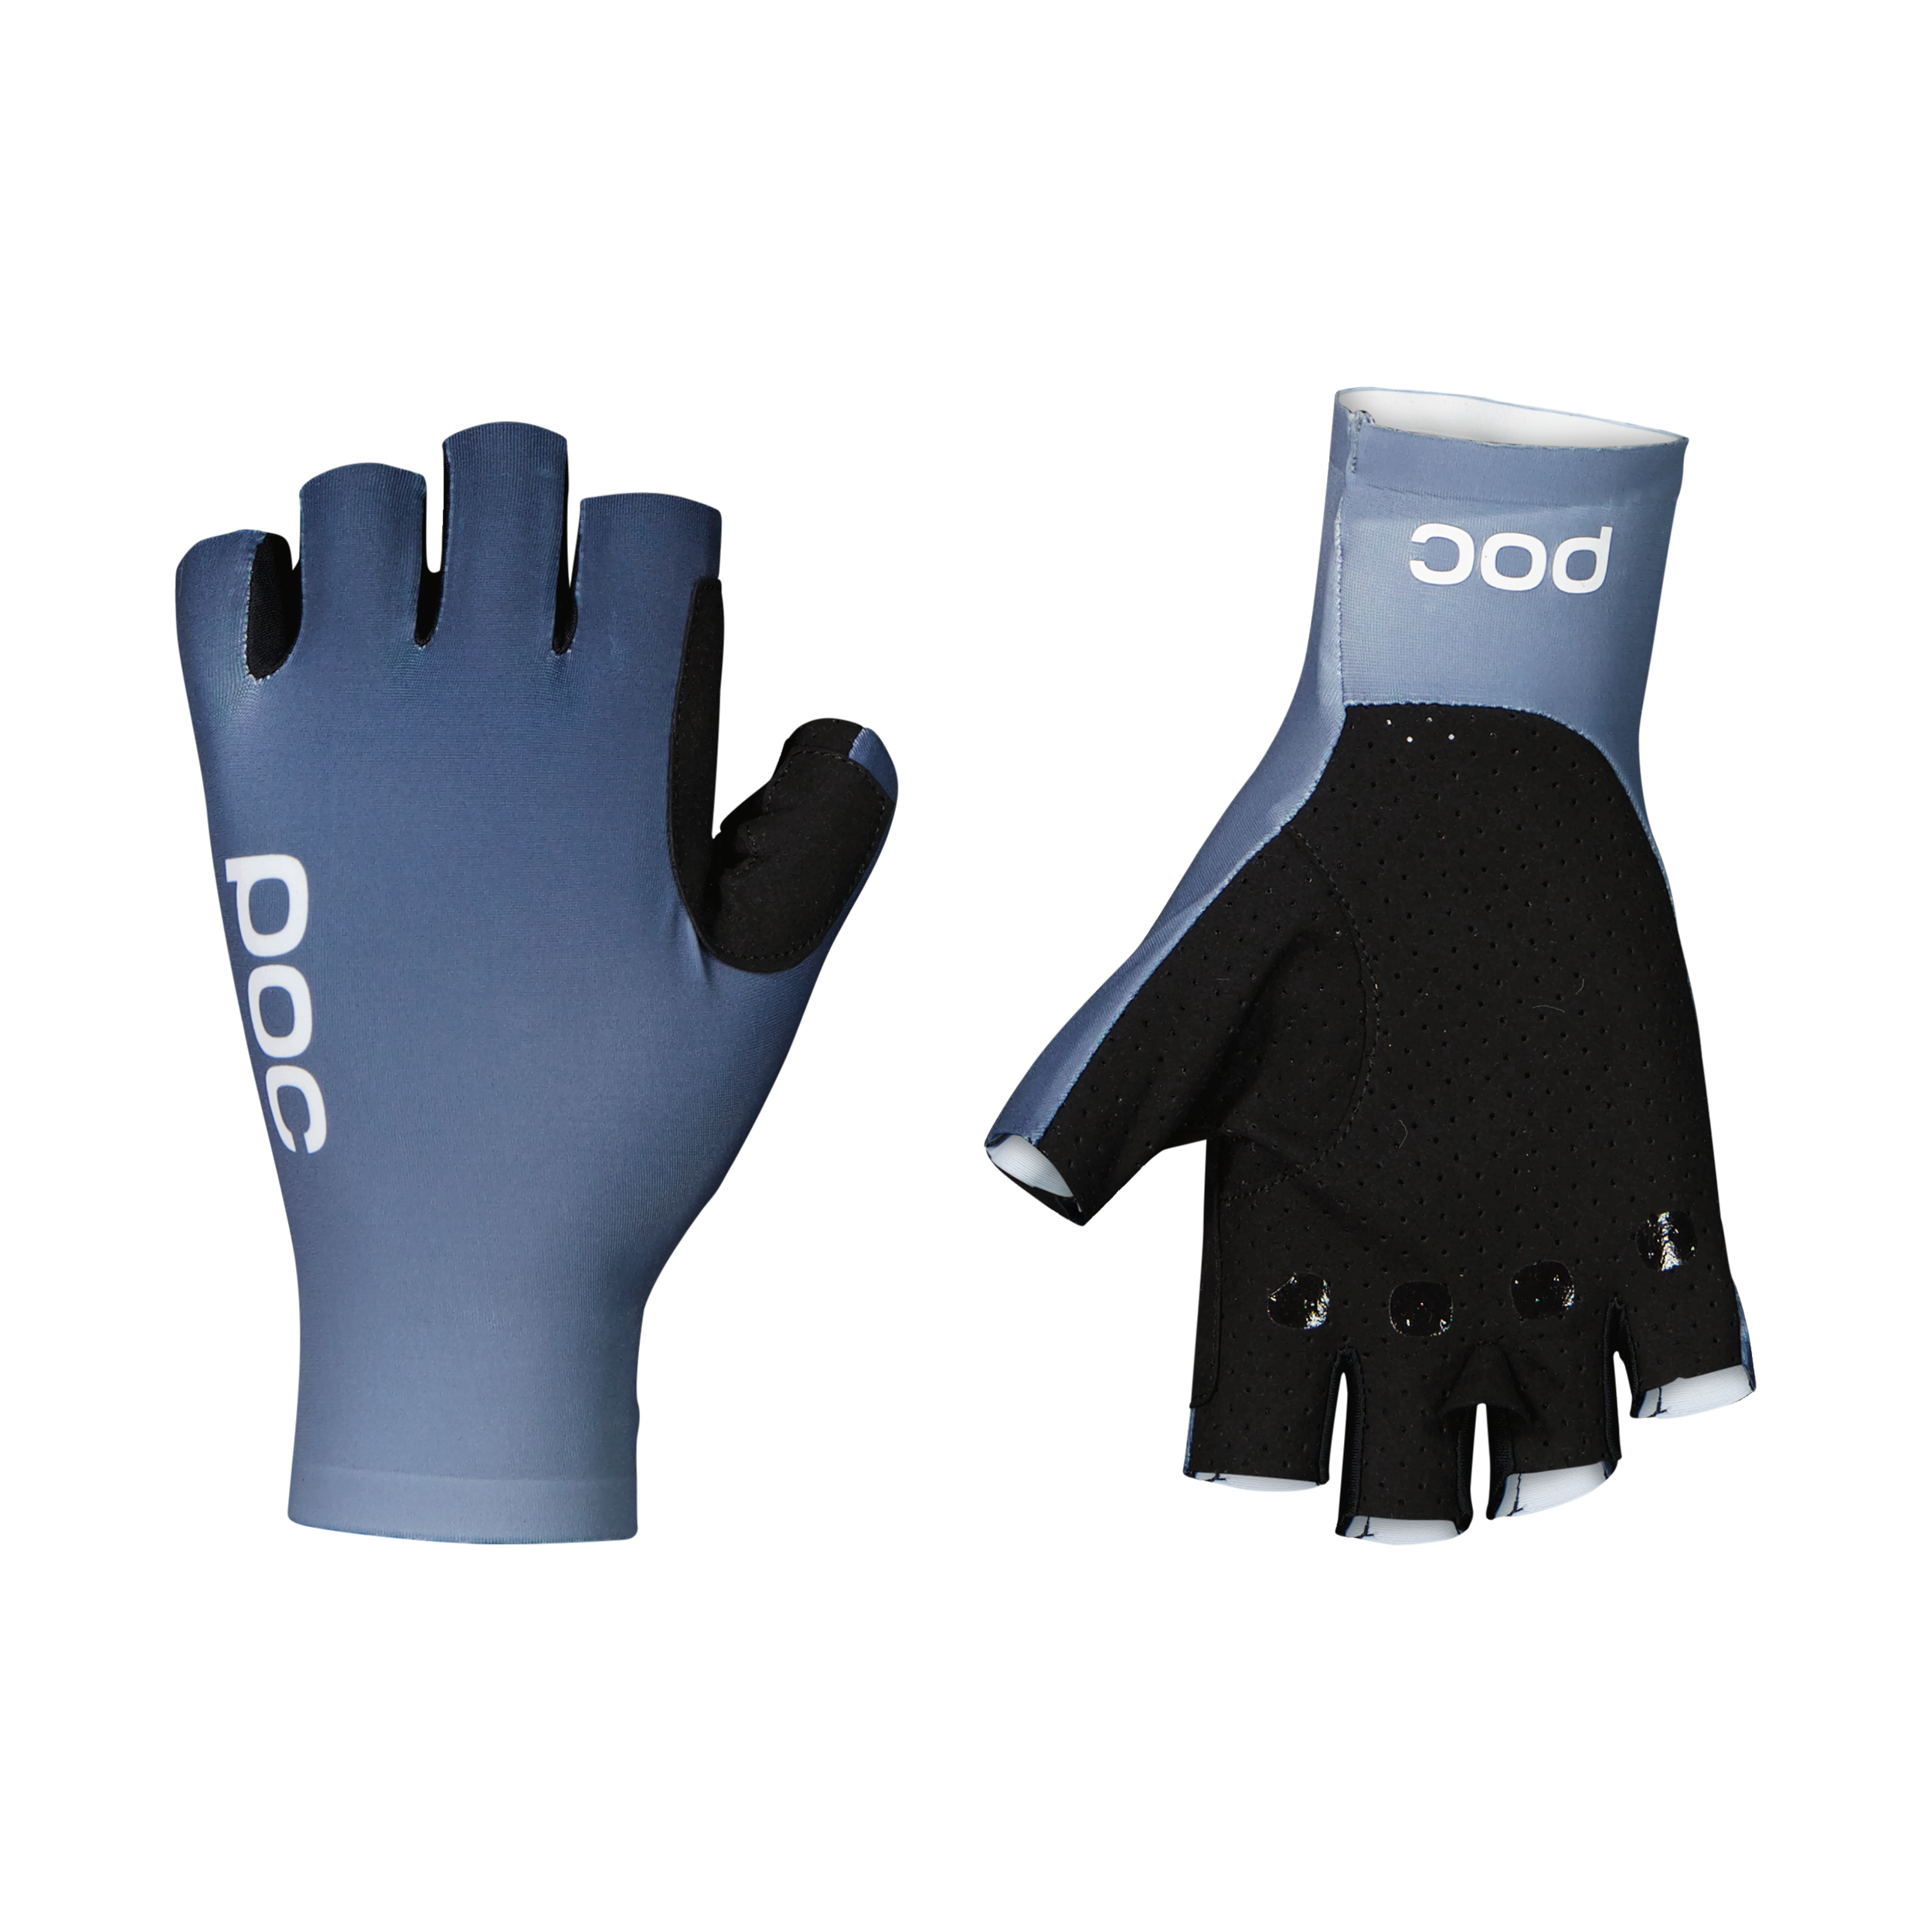 POC Deft Short Glove